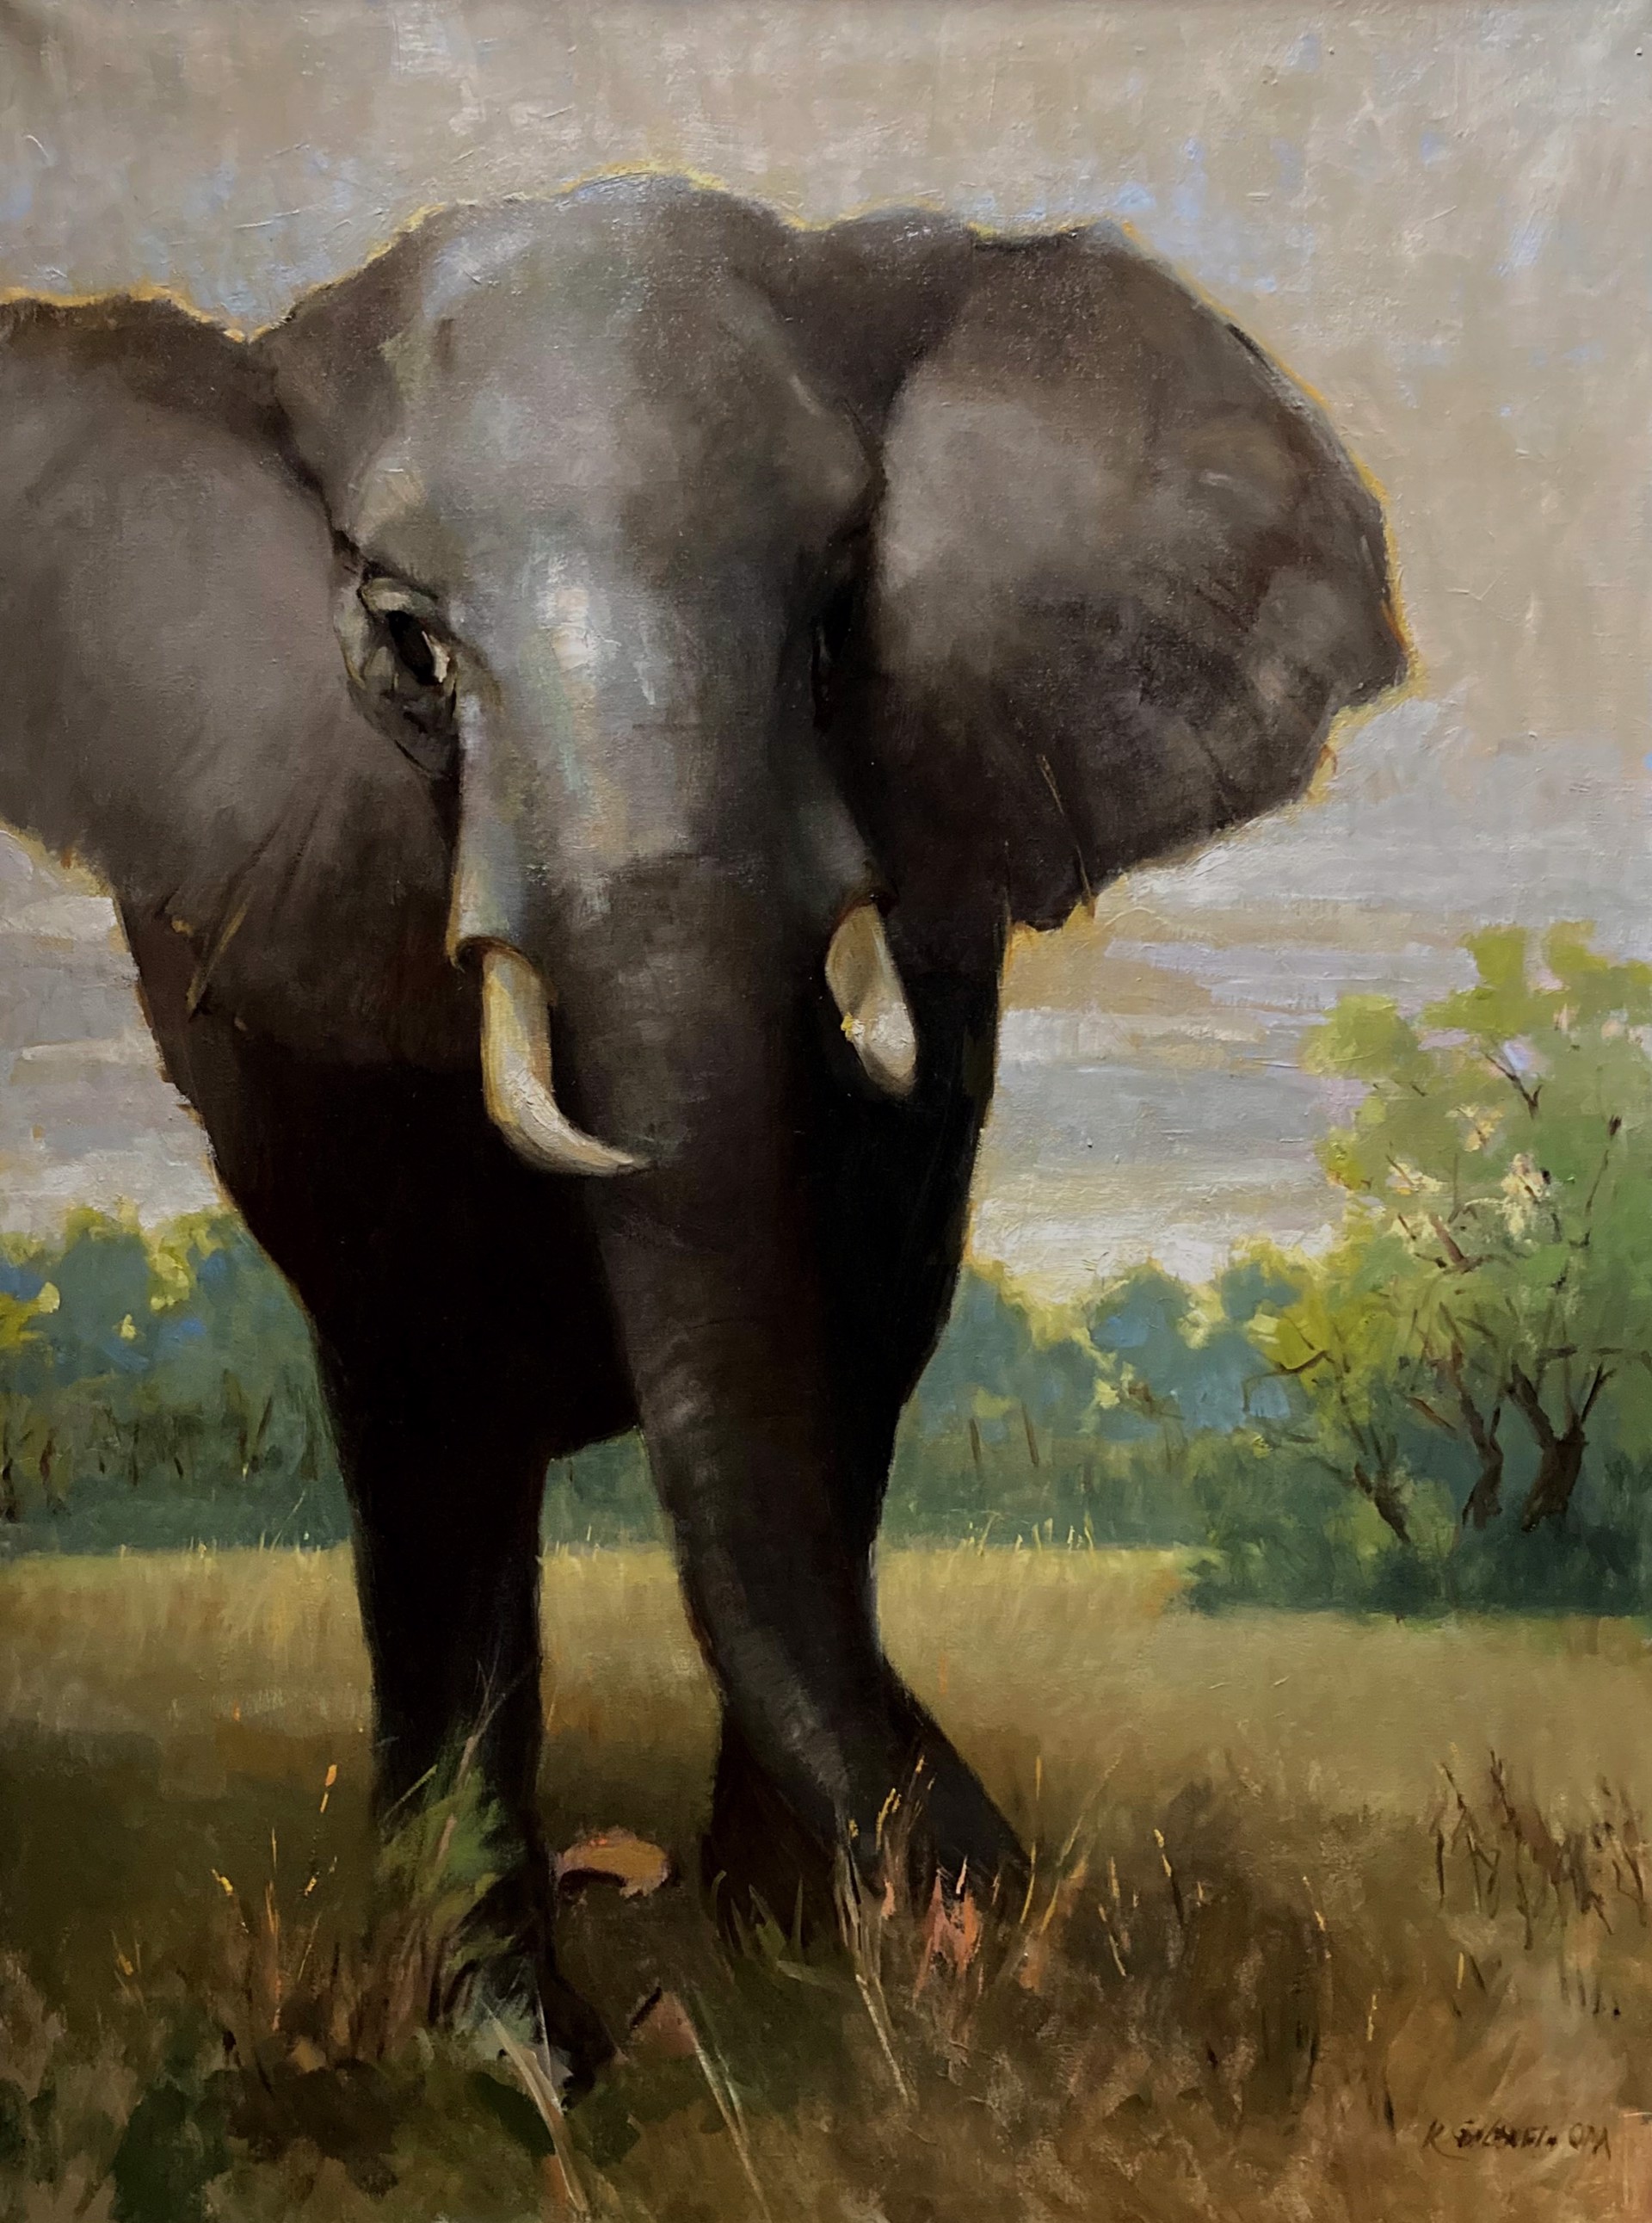 Elephant on the Serengeti Plain by Katherine Galbraith